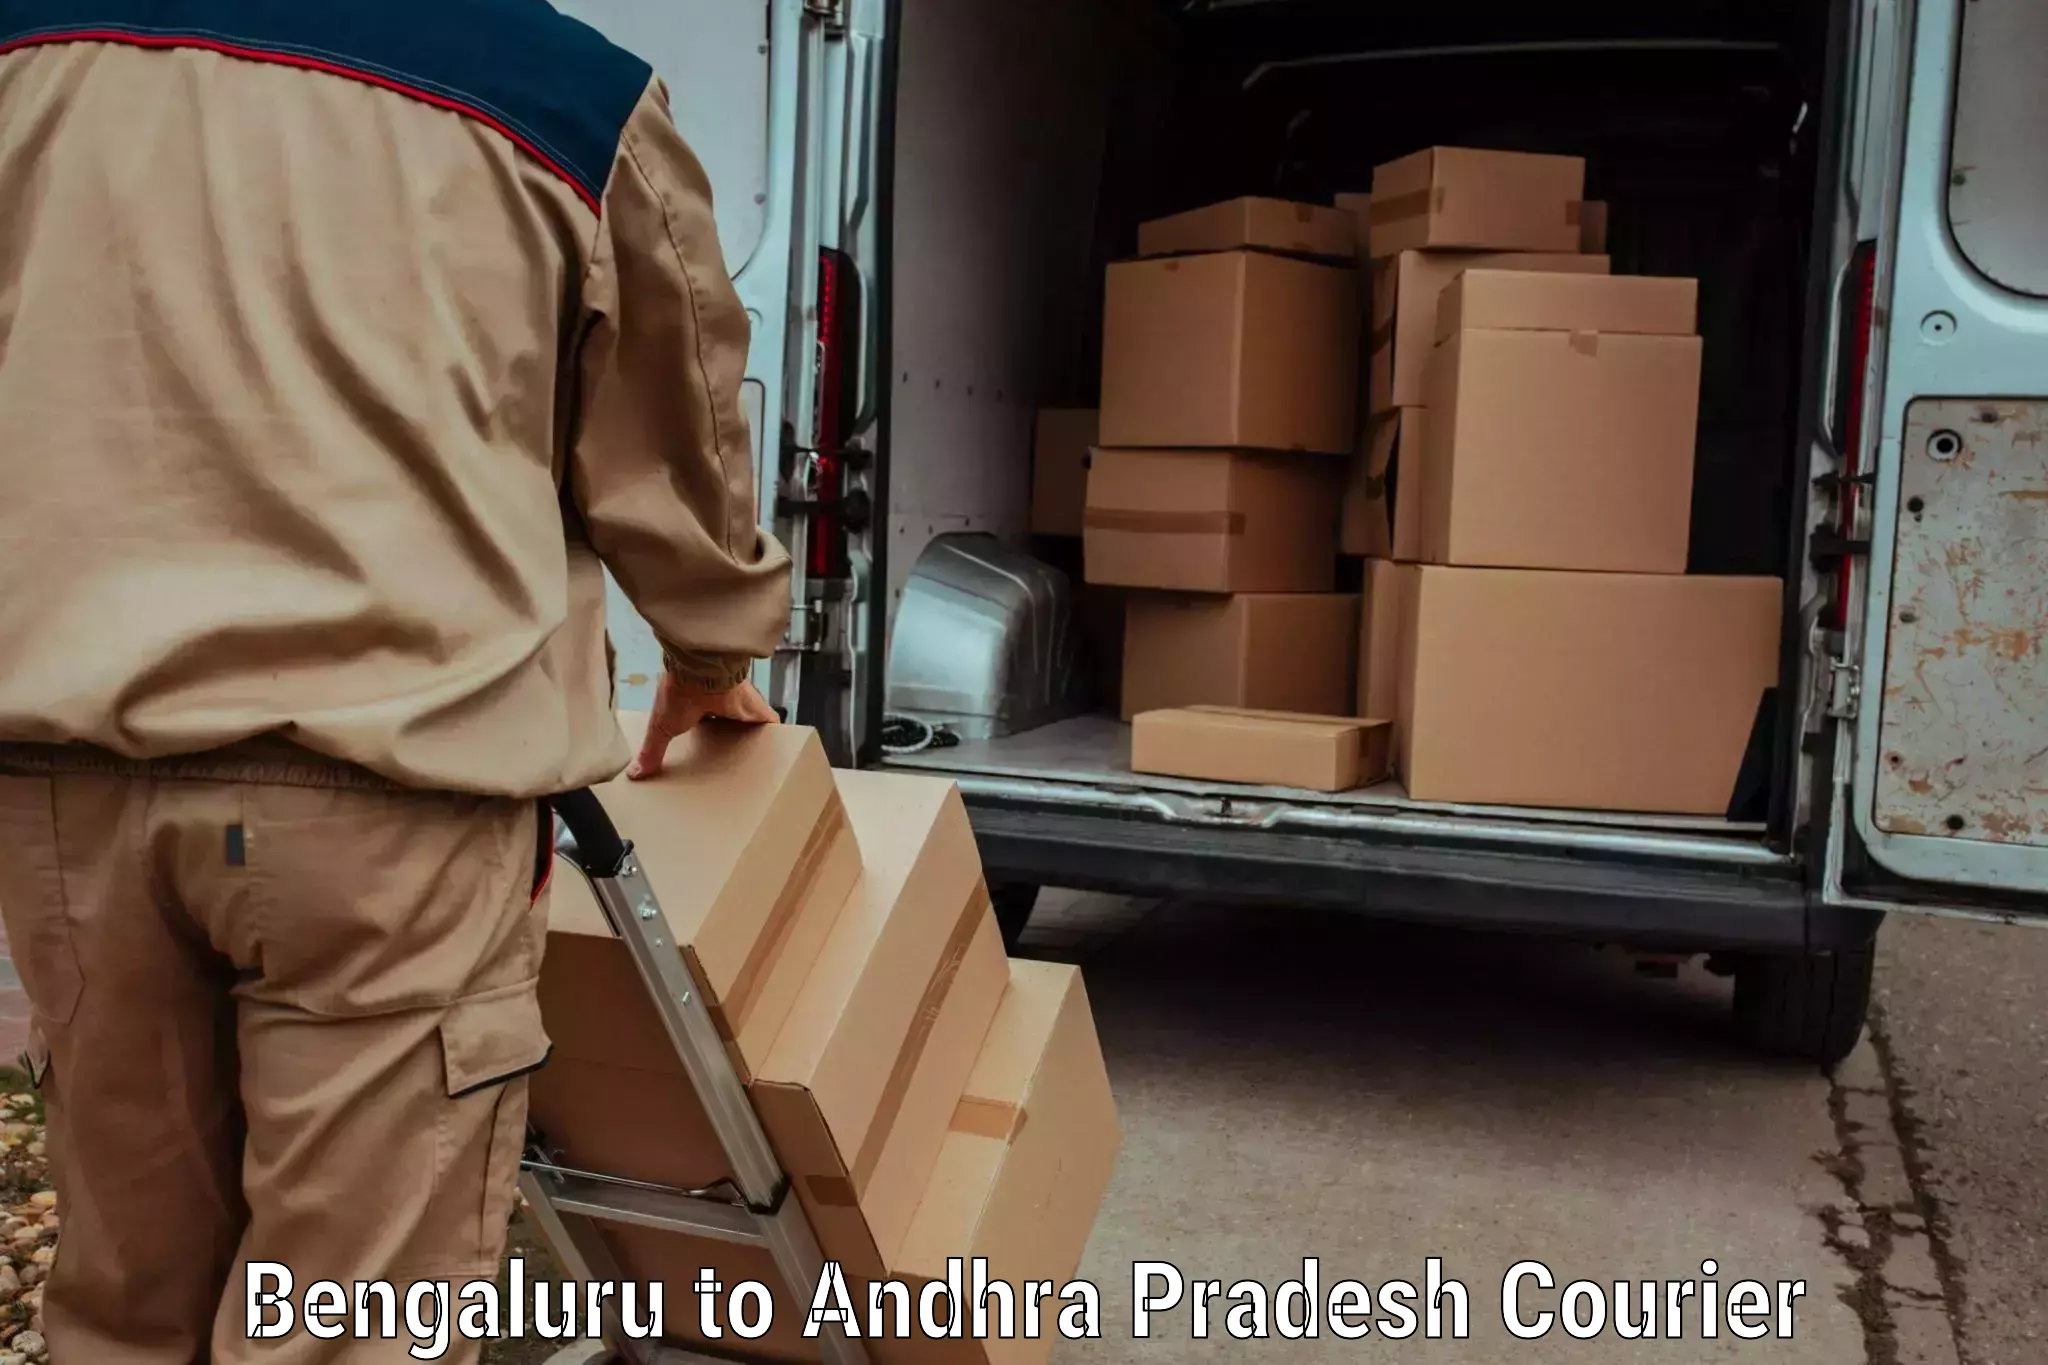 Express postal services in Bengaluru to Yemmiganur